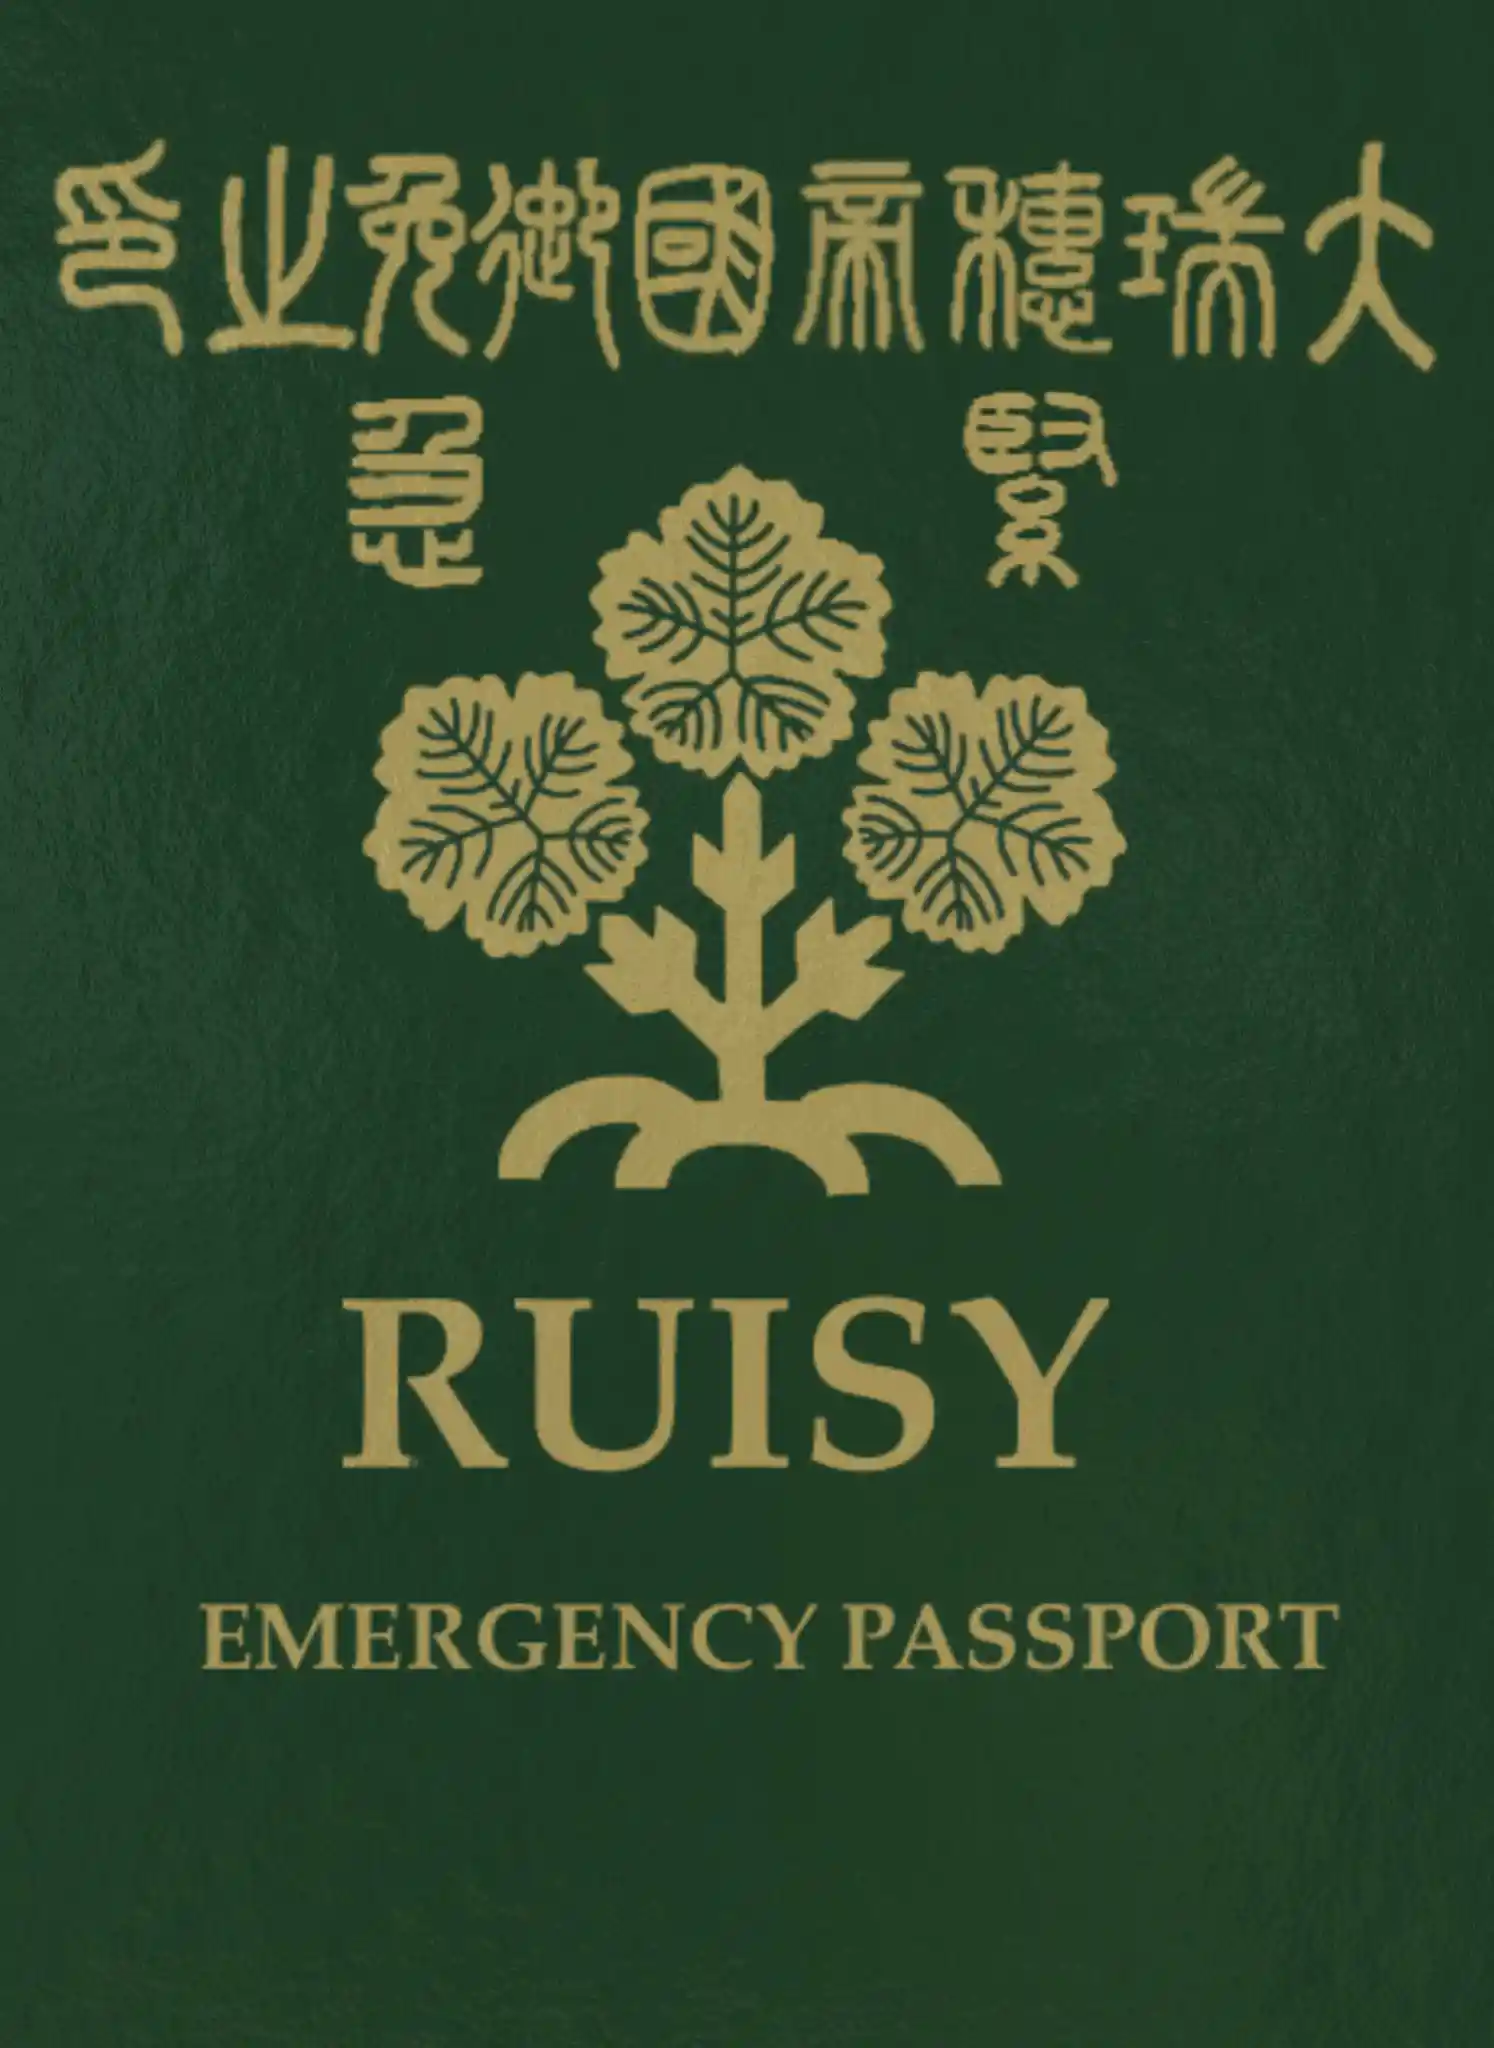 passport_emergency.jpg